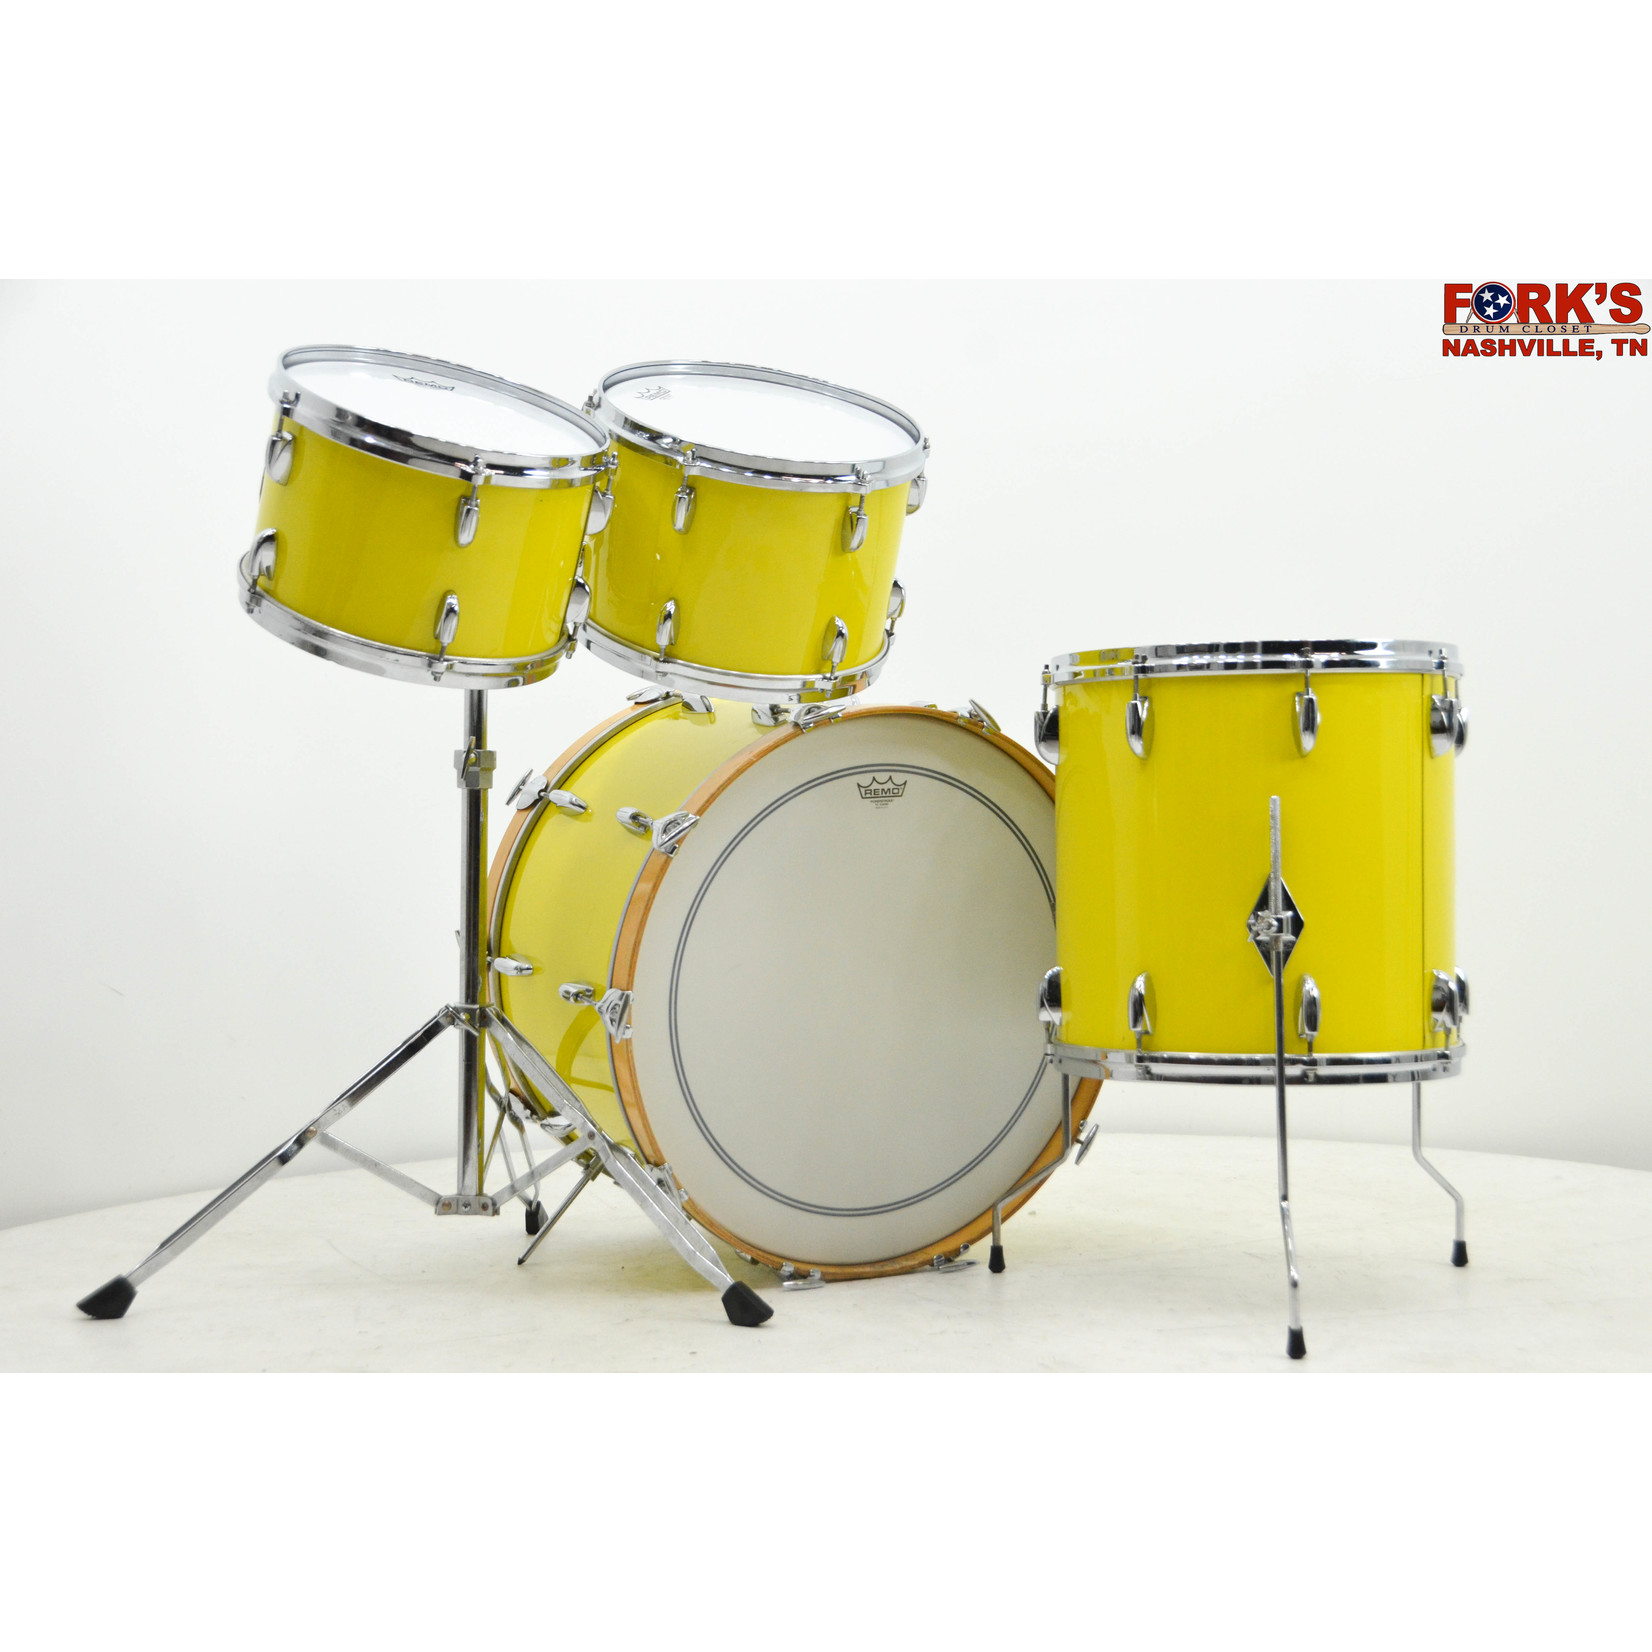 Gretsch Used Gretsch 1970's 4pc Drum Kit - "Yellow"